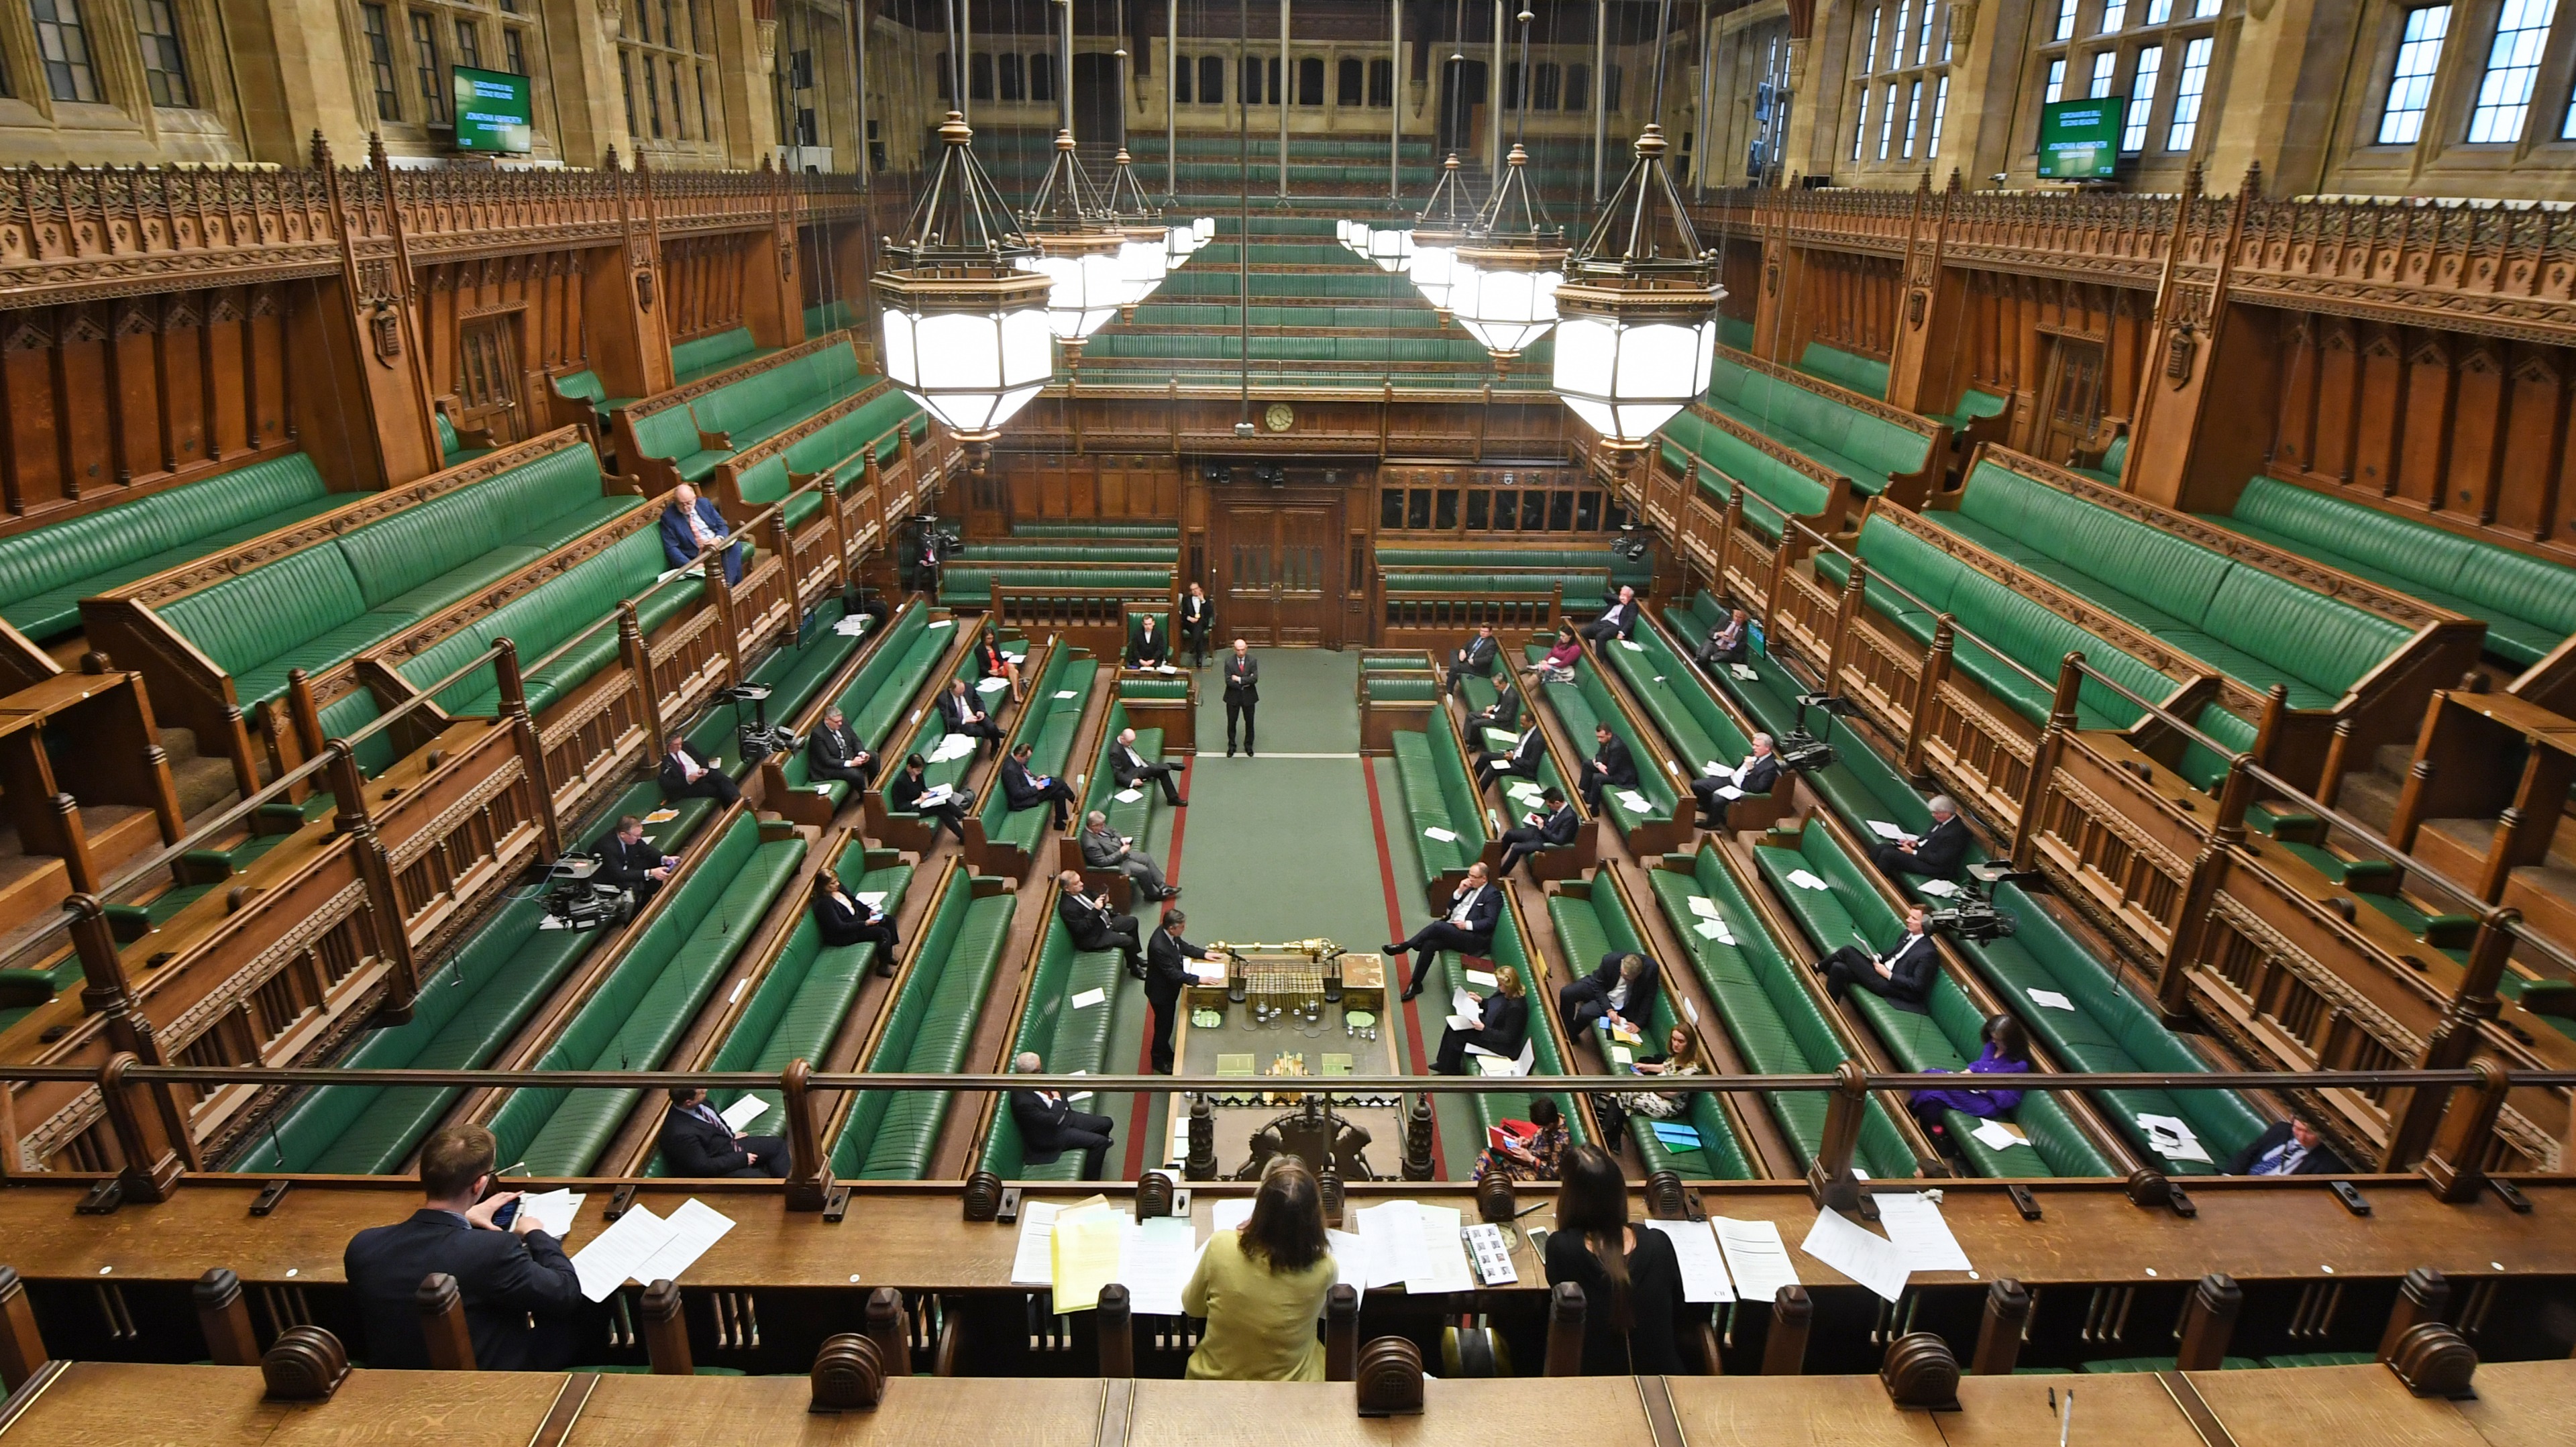 2 the house of commons. Палаты общин (House of Commons). Заседание палаты общин Великобритании. Парламент Англии палата общин. Нижняя палата парламента Великобритании.